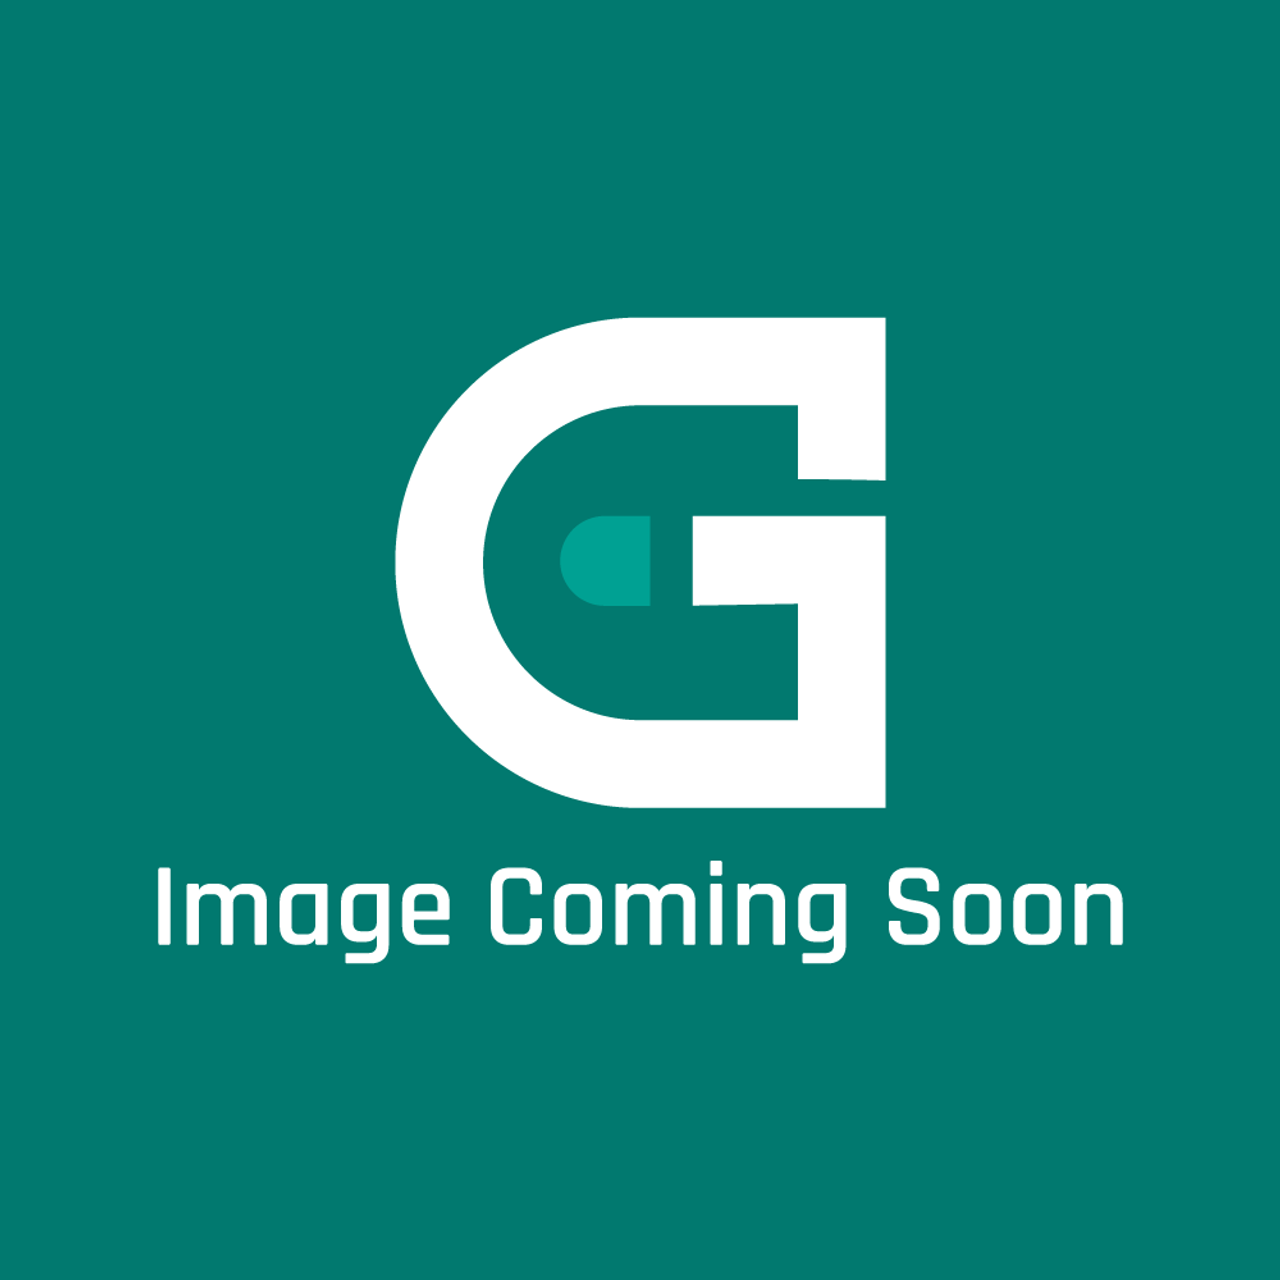 Garland F300 - Clip-Tinnerman #C2982-S6 -319 - Image Coming Soon!